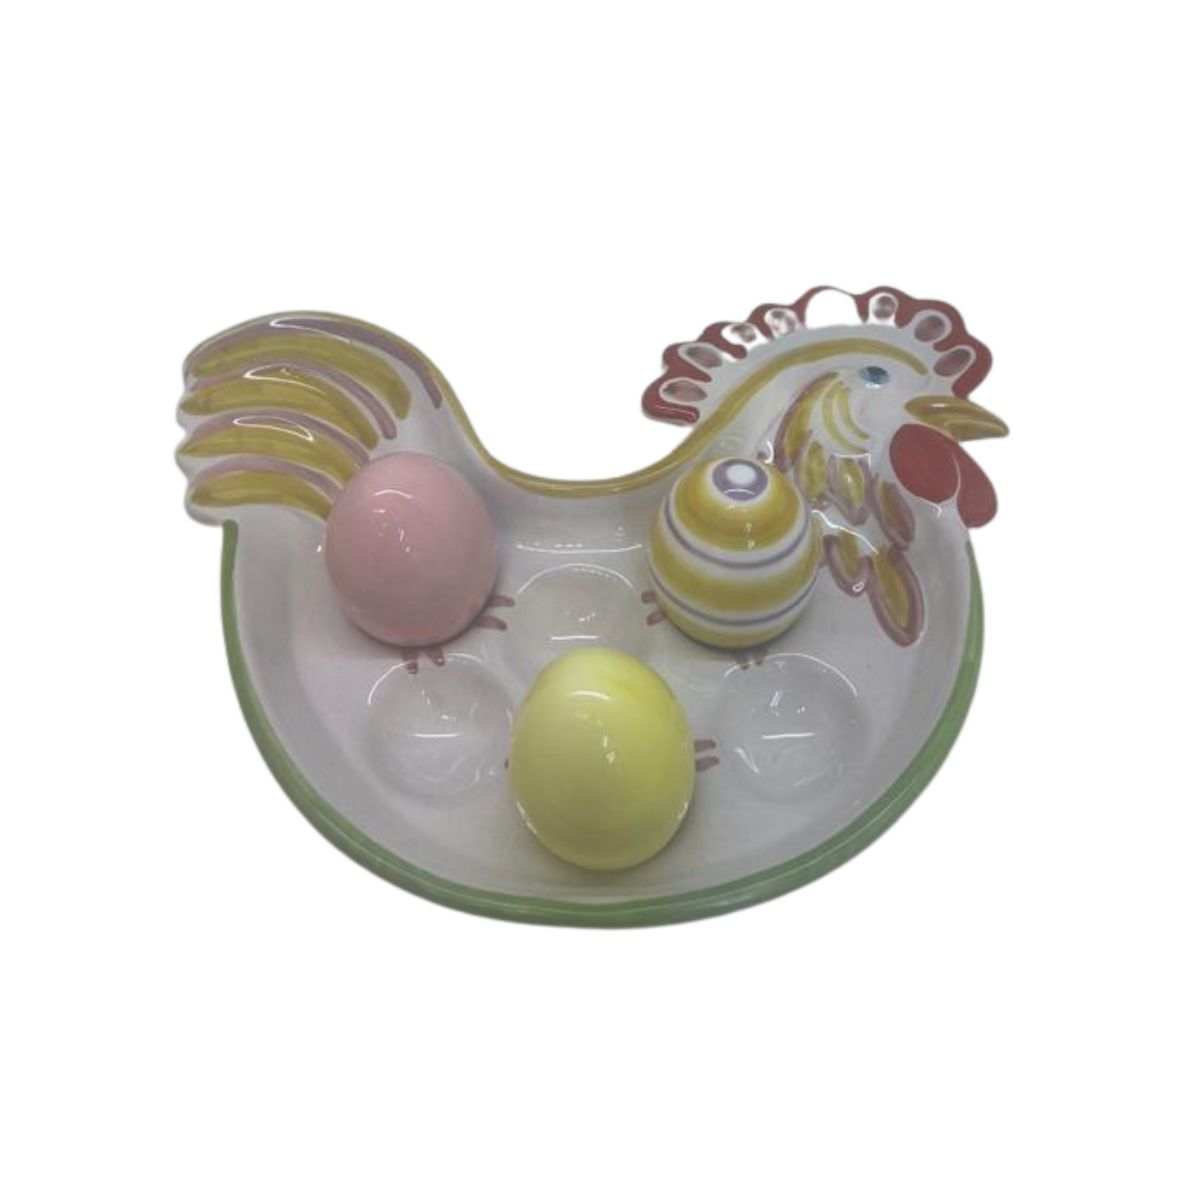 Gallina in ceramica porta uova